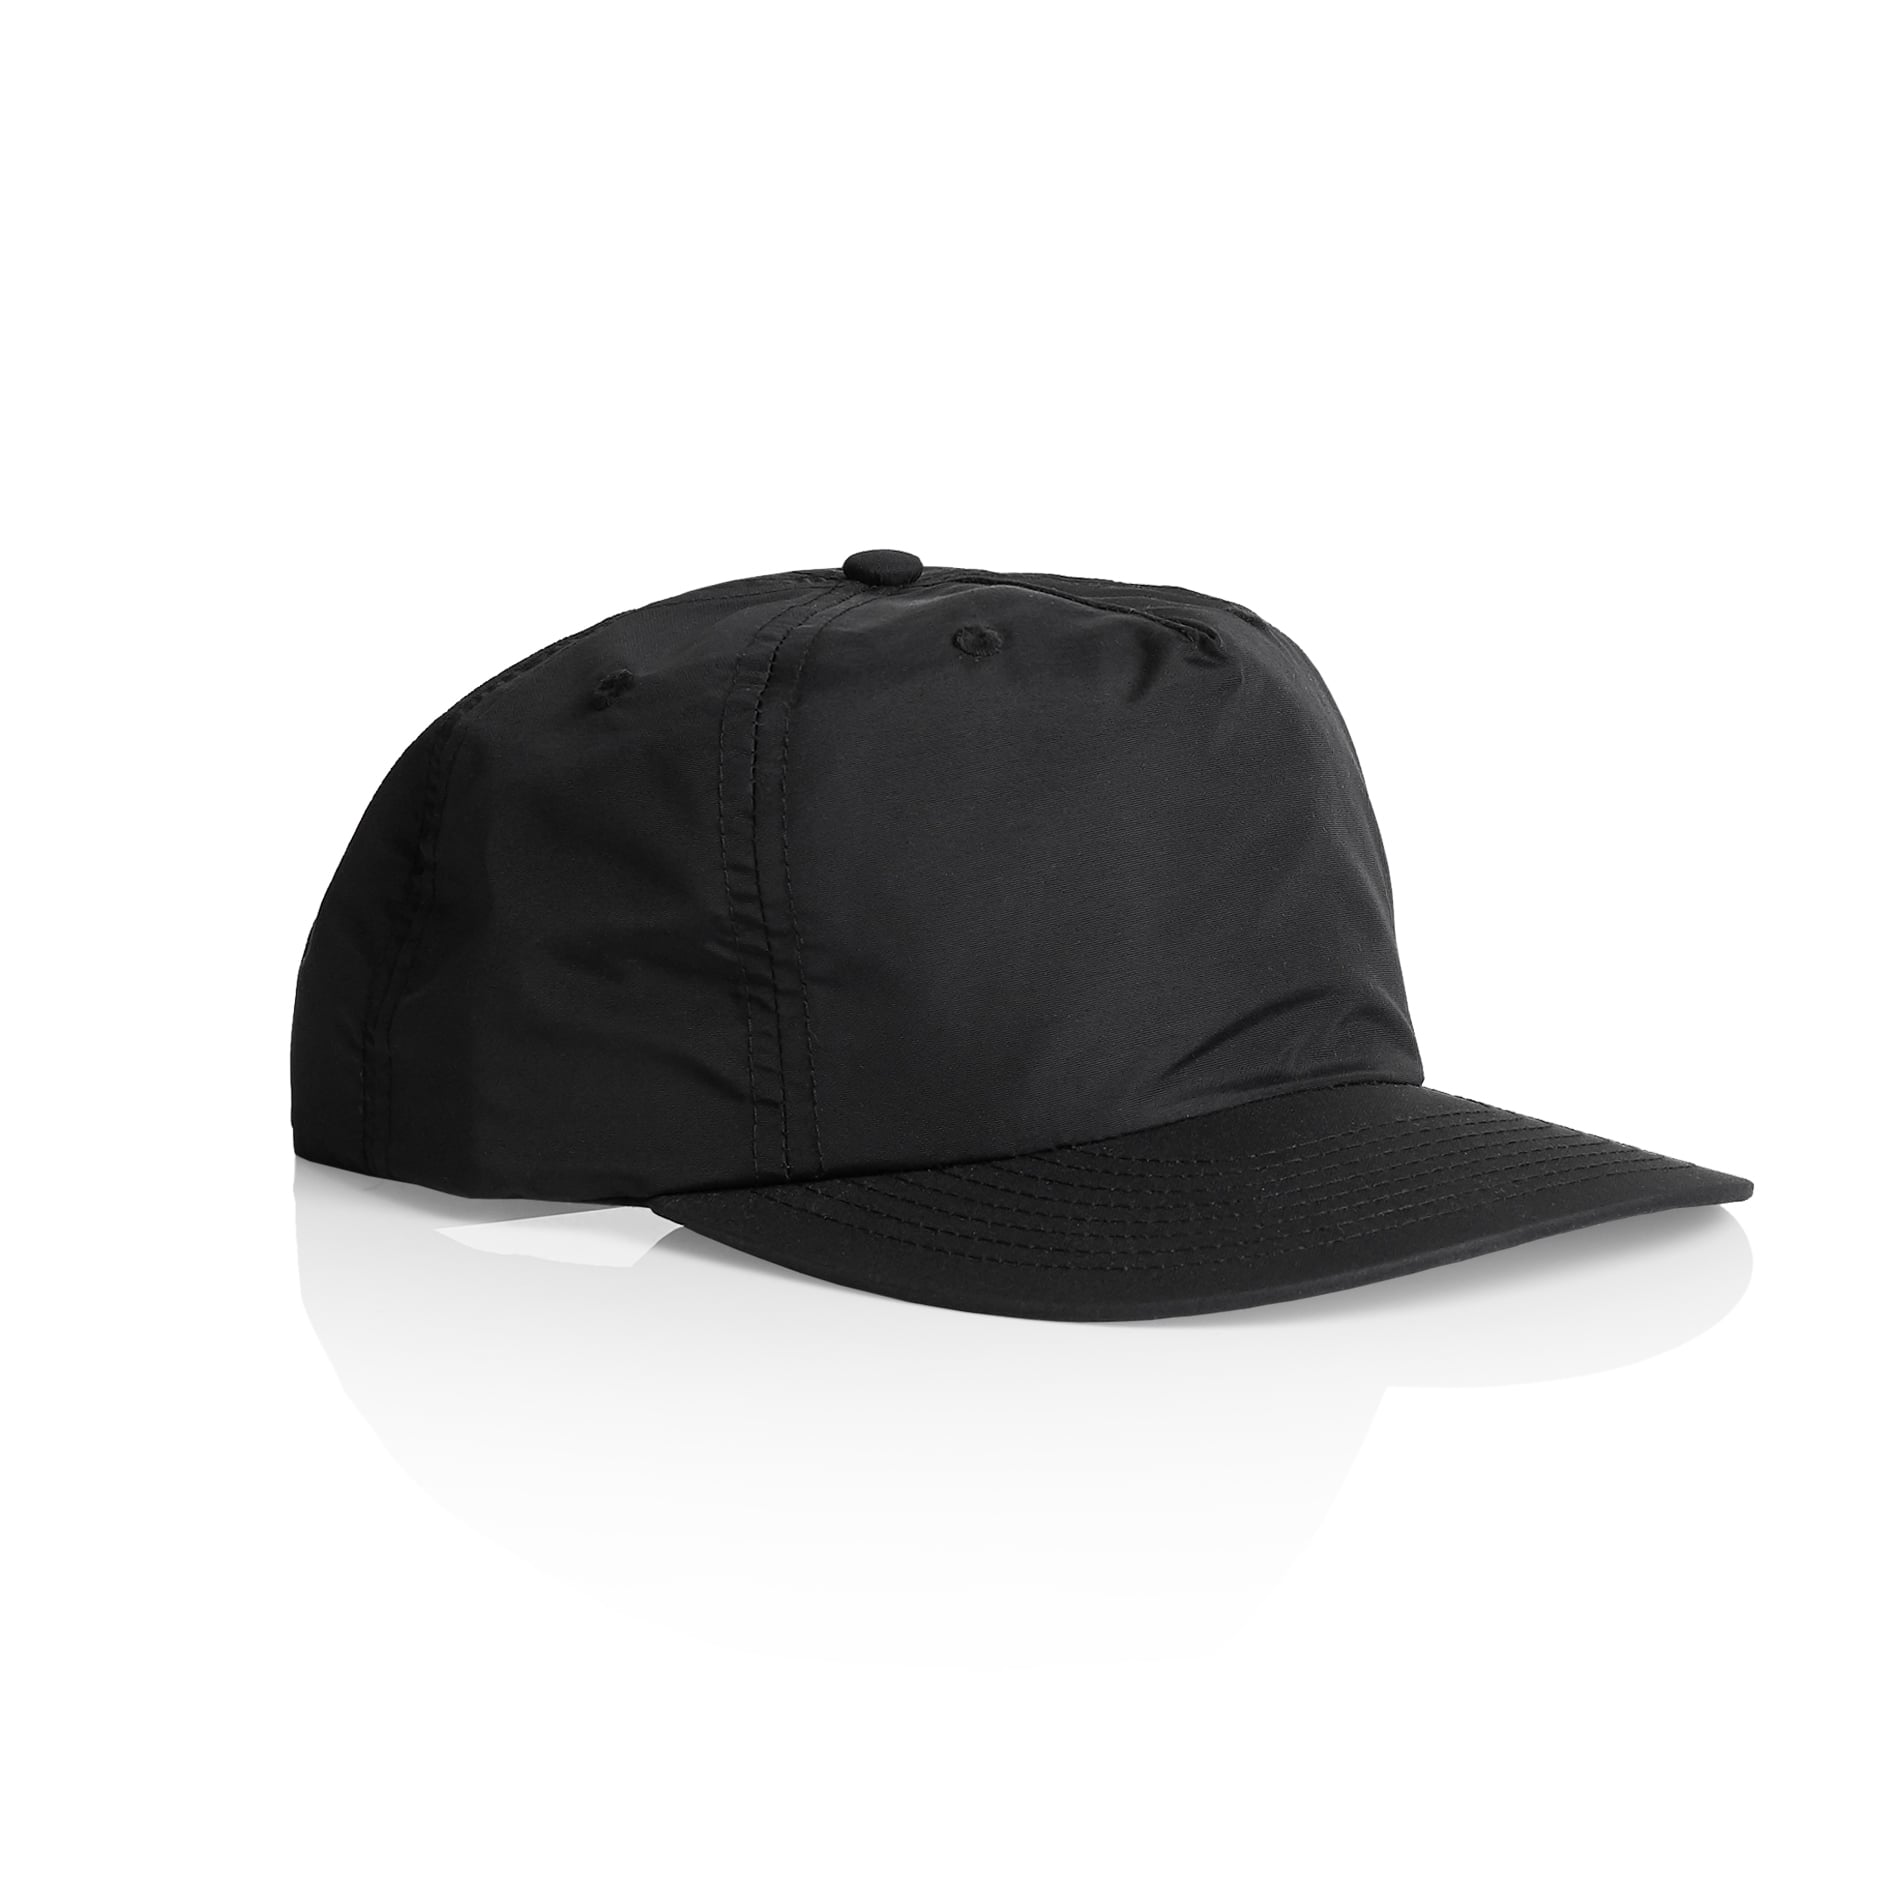 5 best caps to personalise - 1114 surf cap black